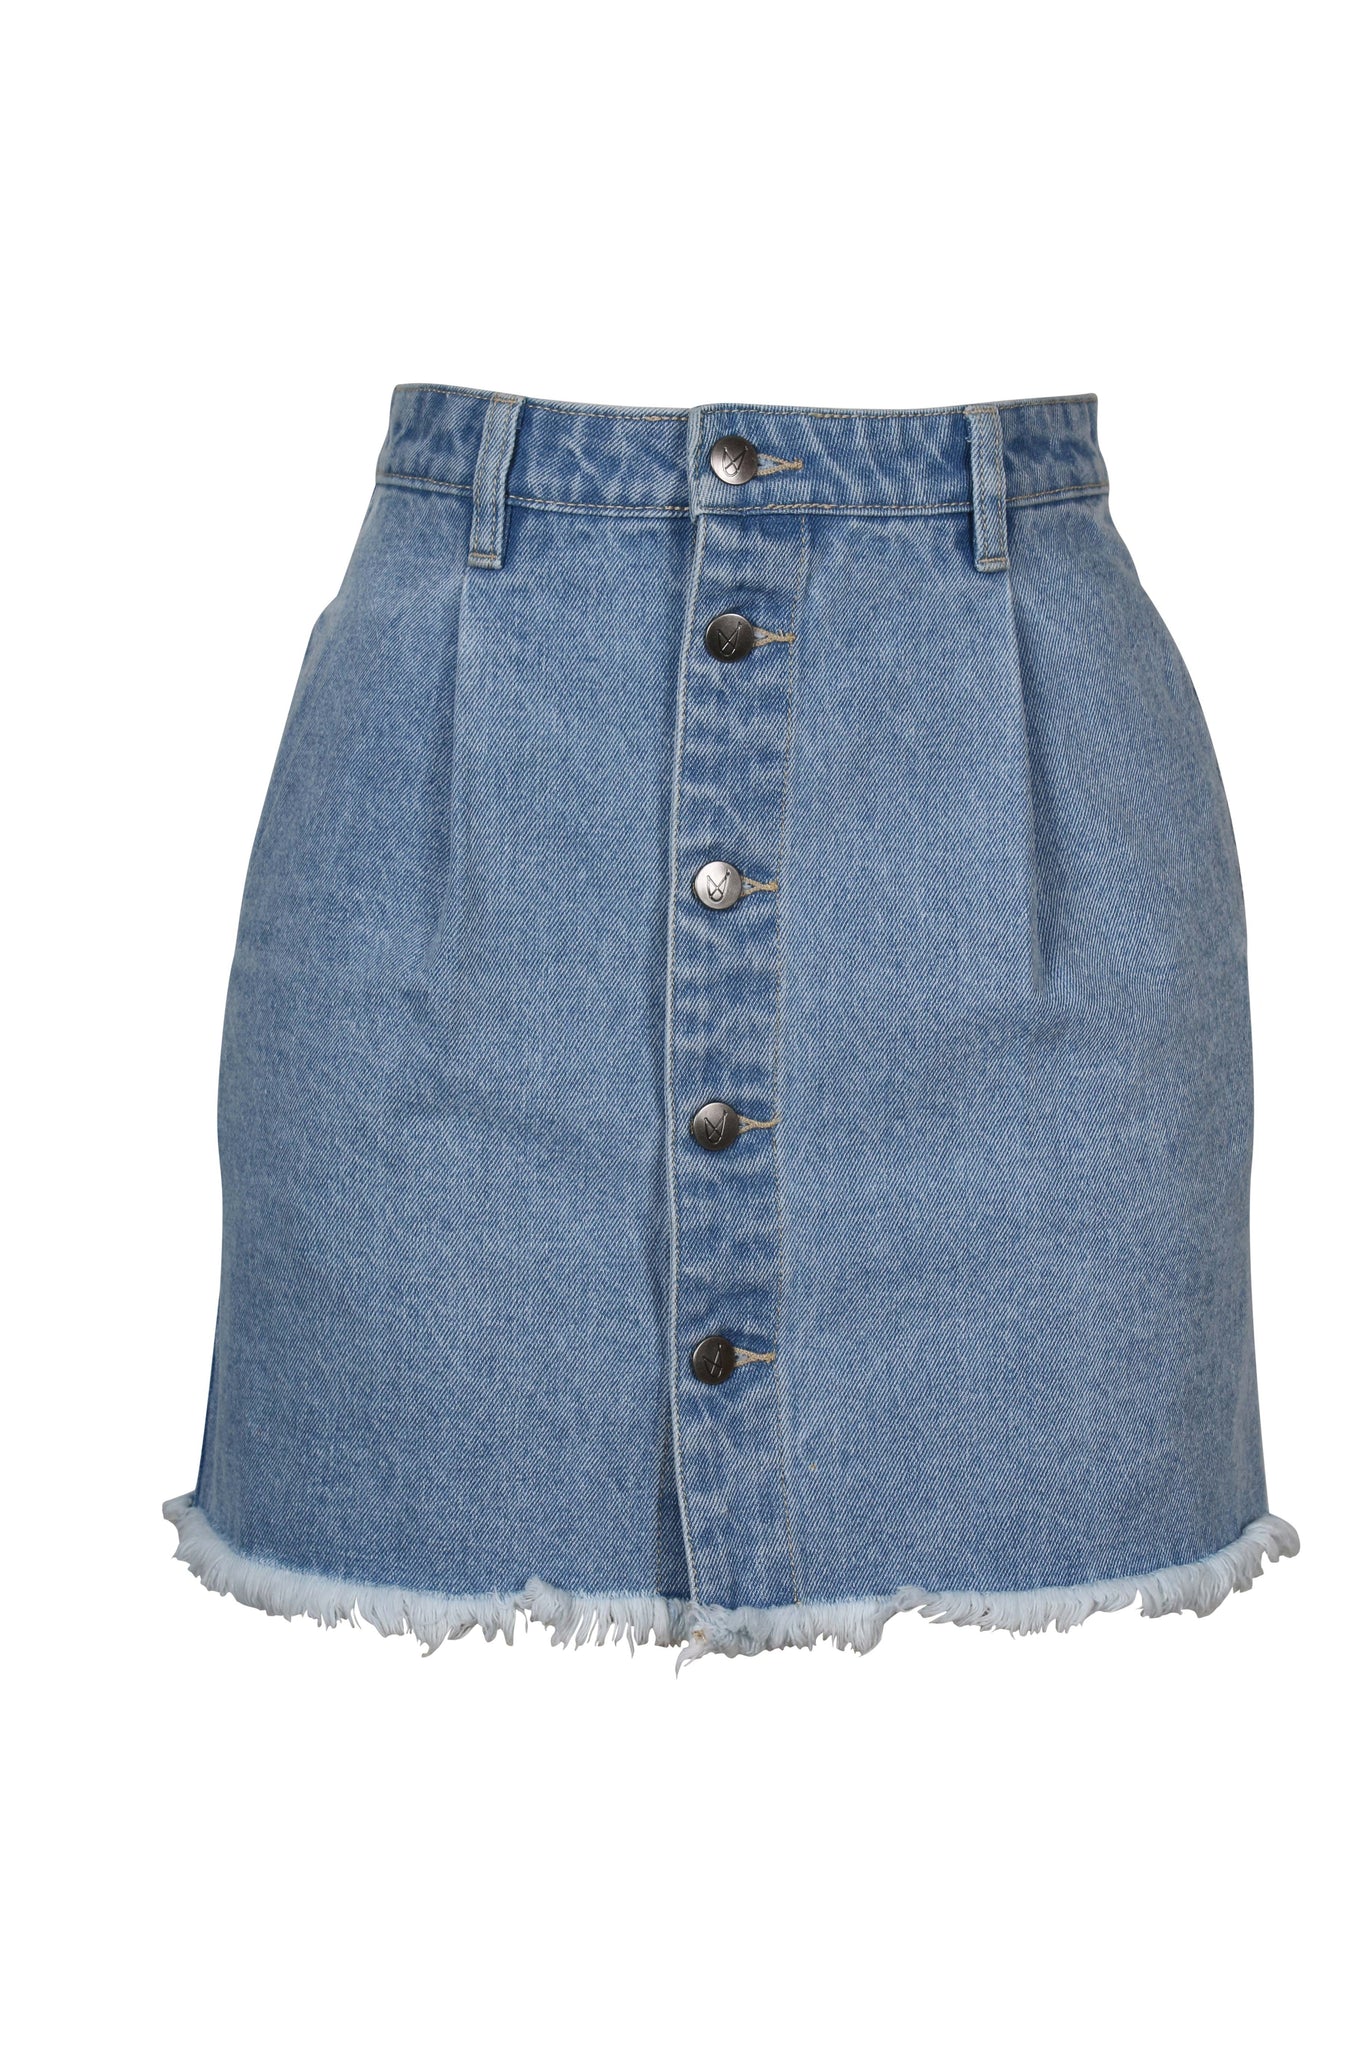 Fraya Button Front Skirt by MINKPINK